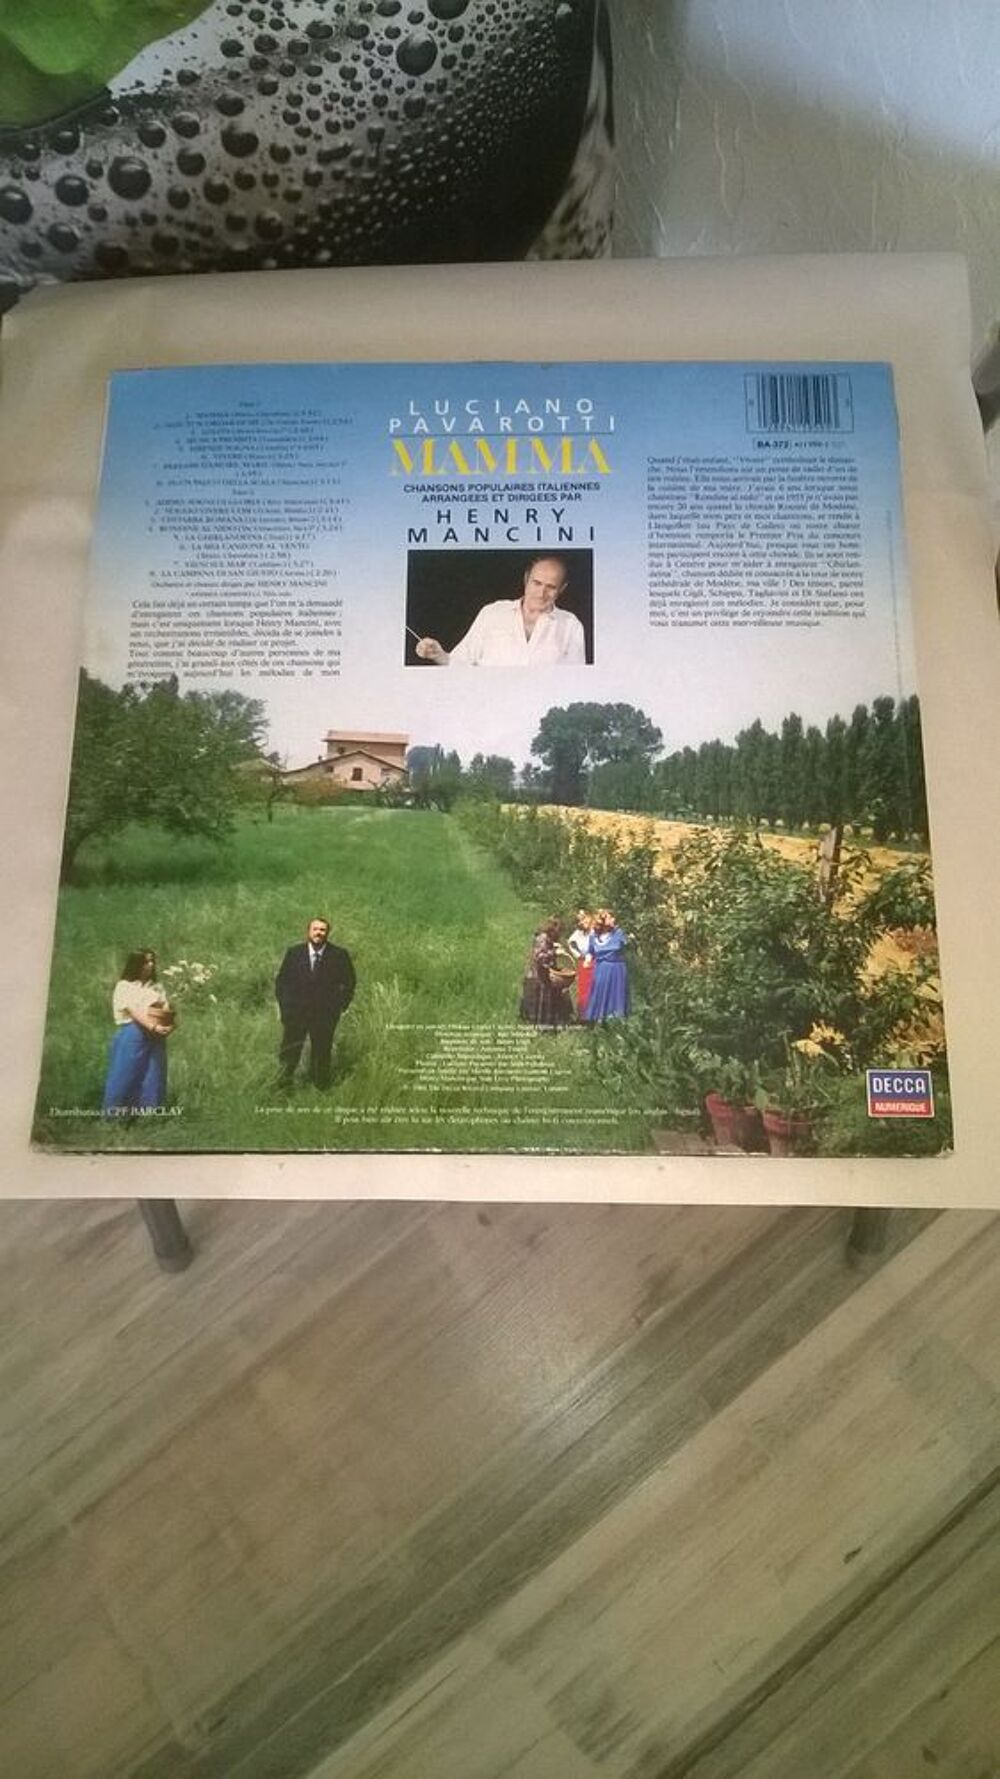 Vinyle Luciano Pavarotti / Henry Mancini
Mamma
1984
Bon e CD et vinyles